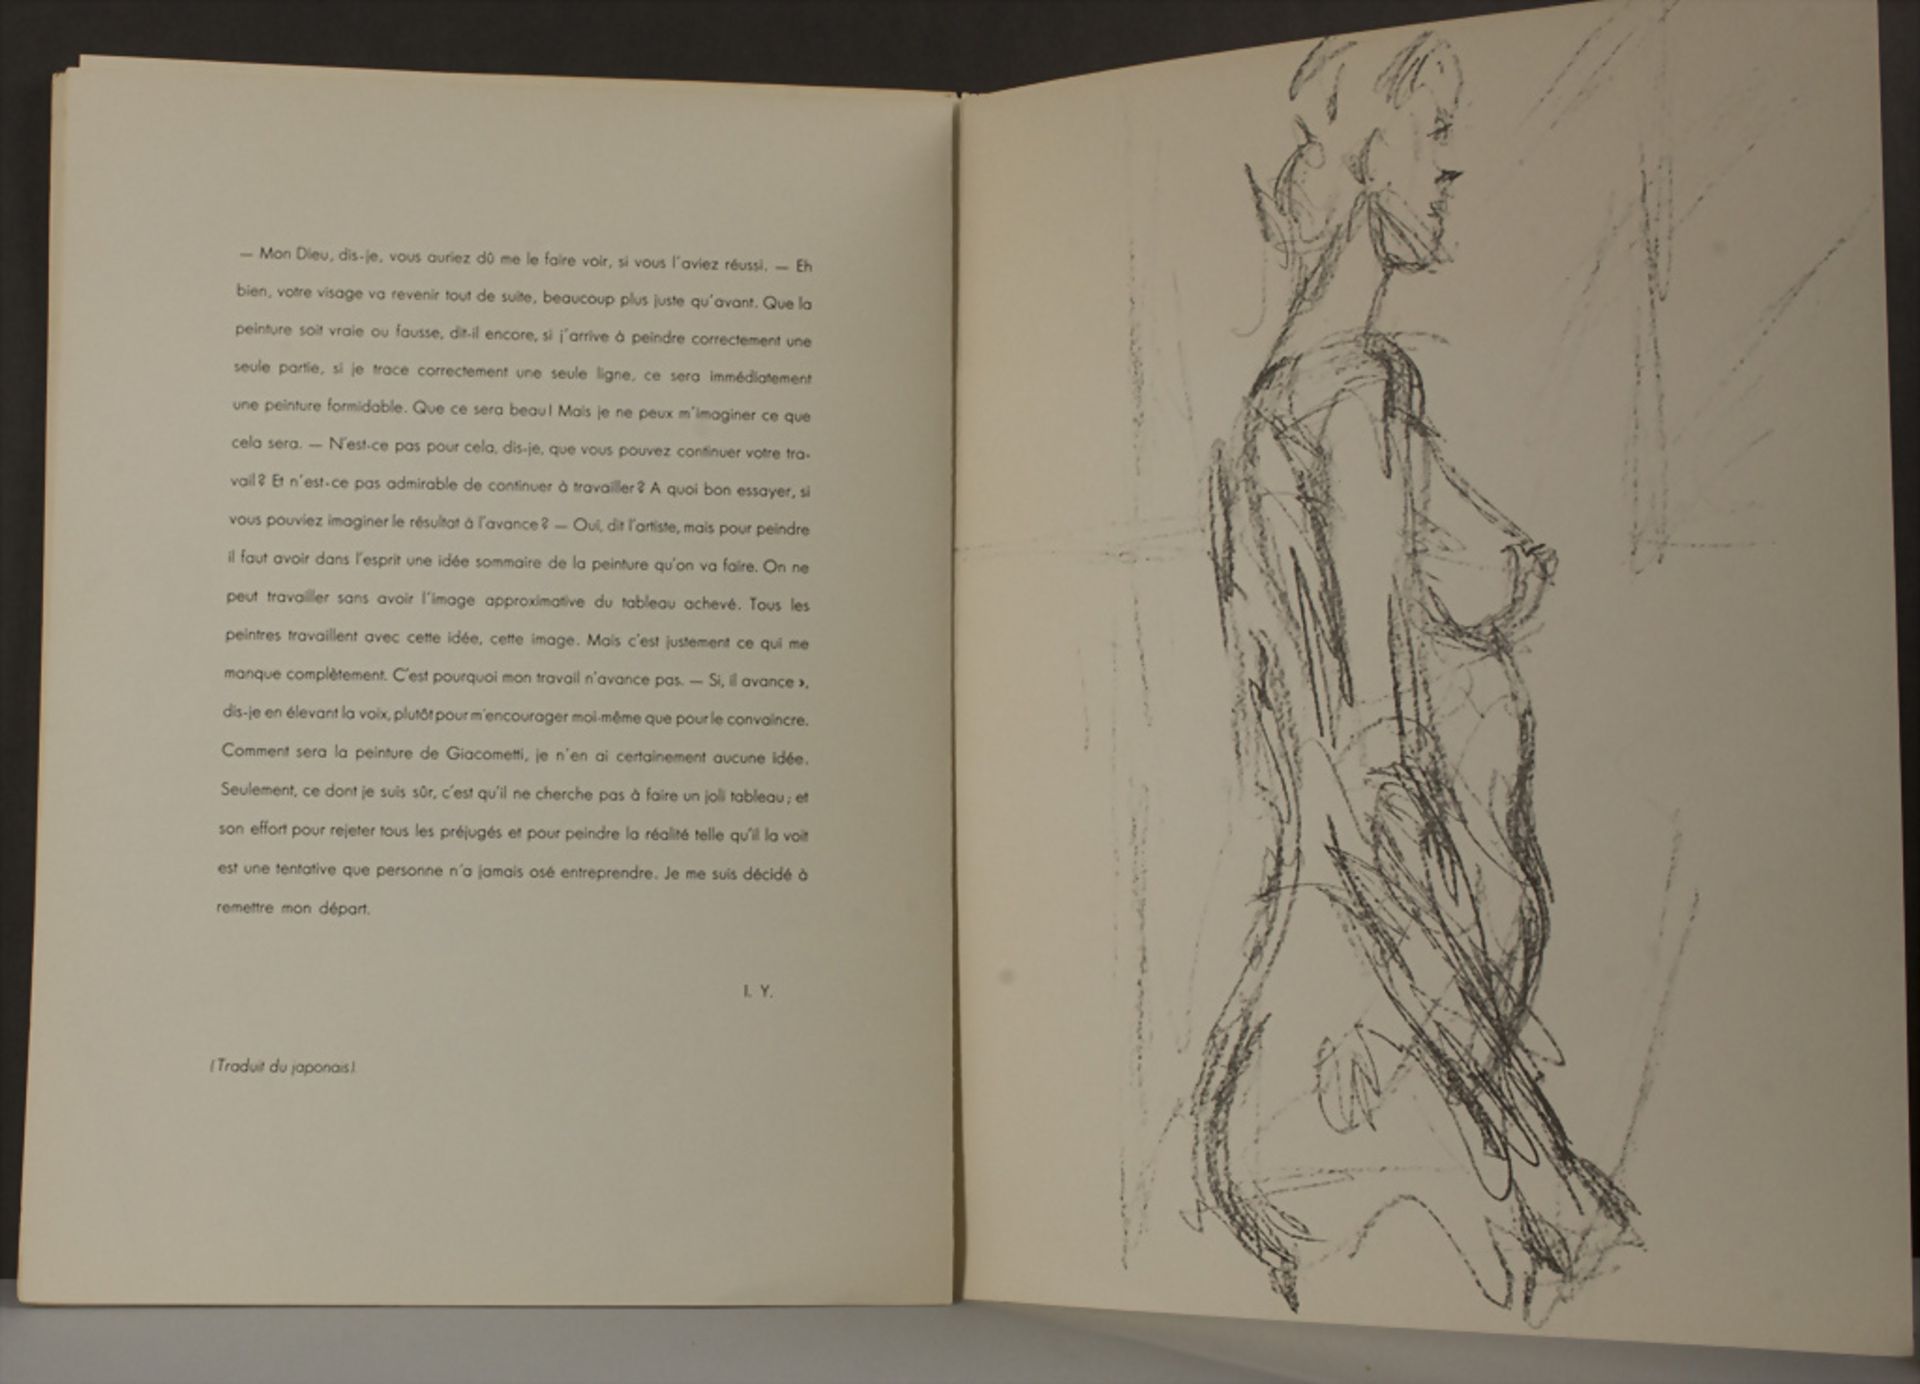 Alberto Giacometti (1901-1966), 'Derrière le miroir', No. 127 / 'Behind the mirror' No. 127, ... - Image 3 of 3